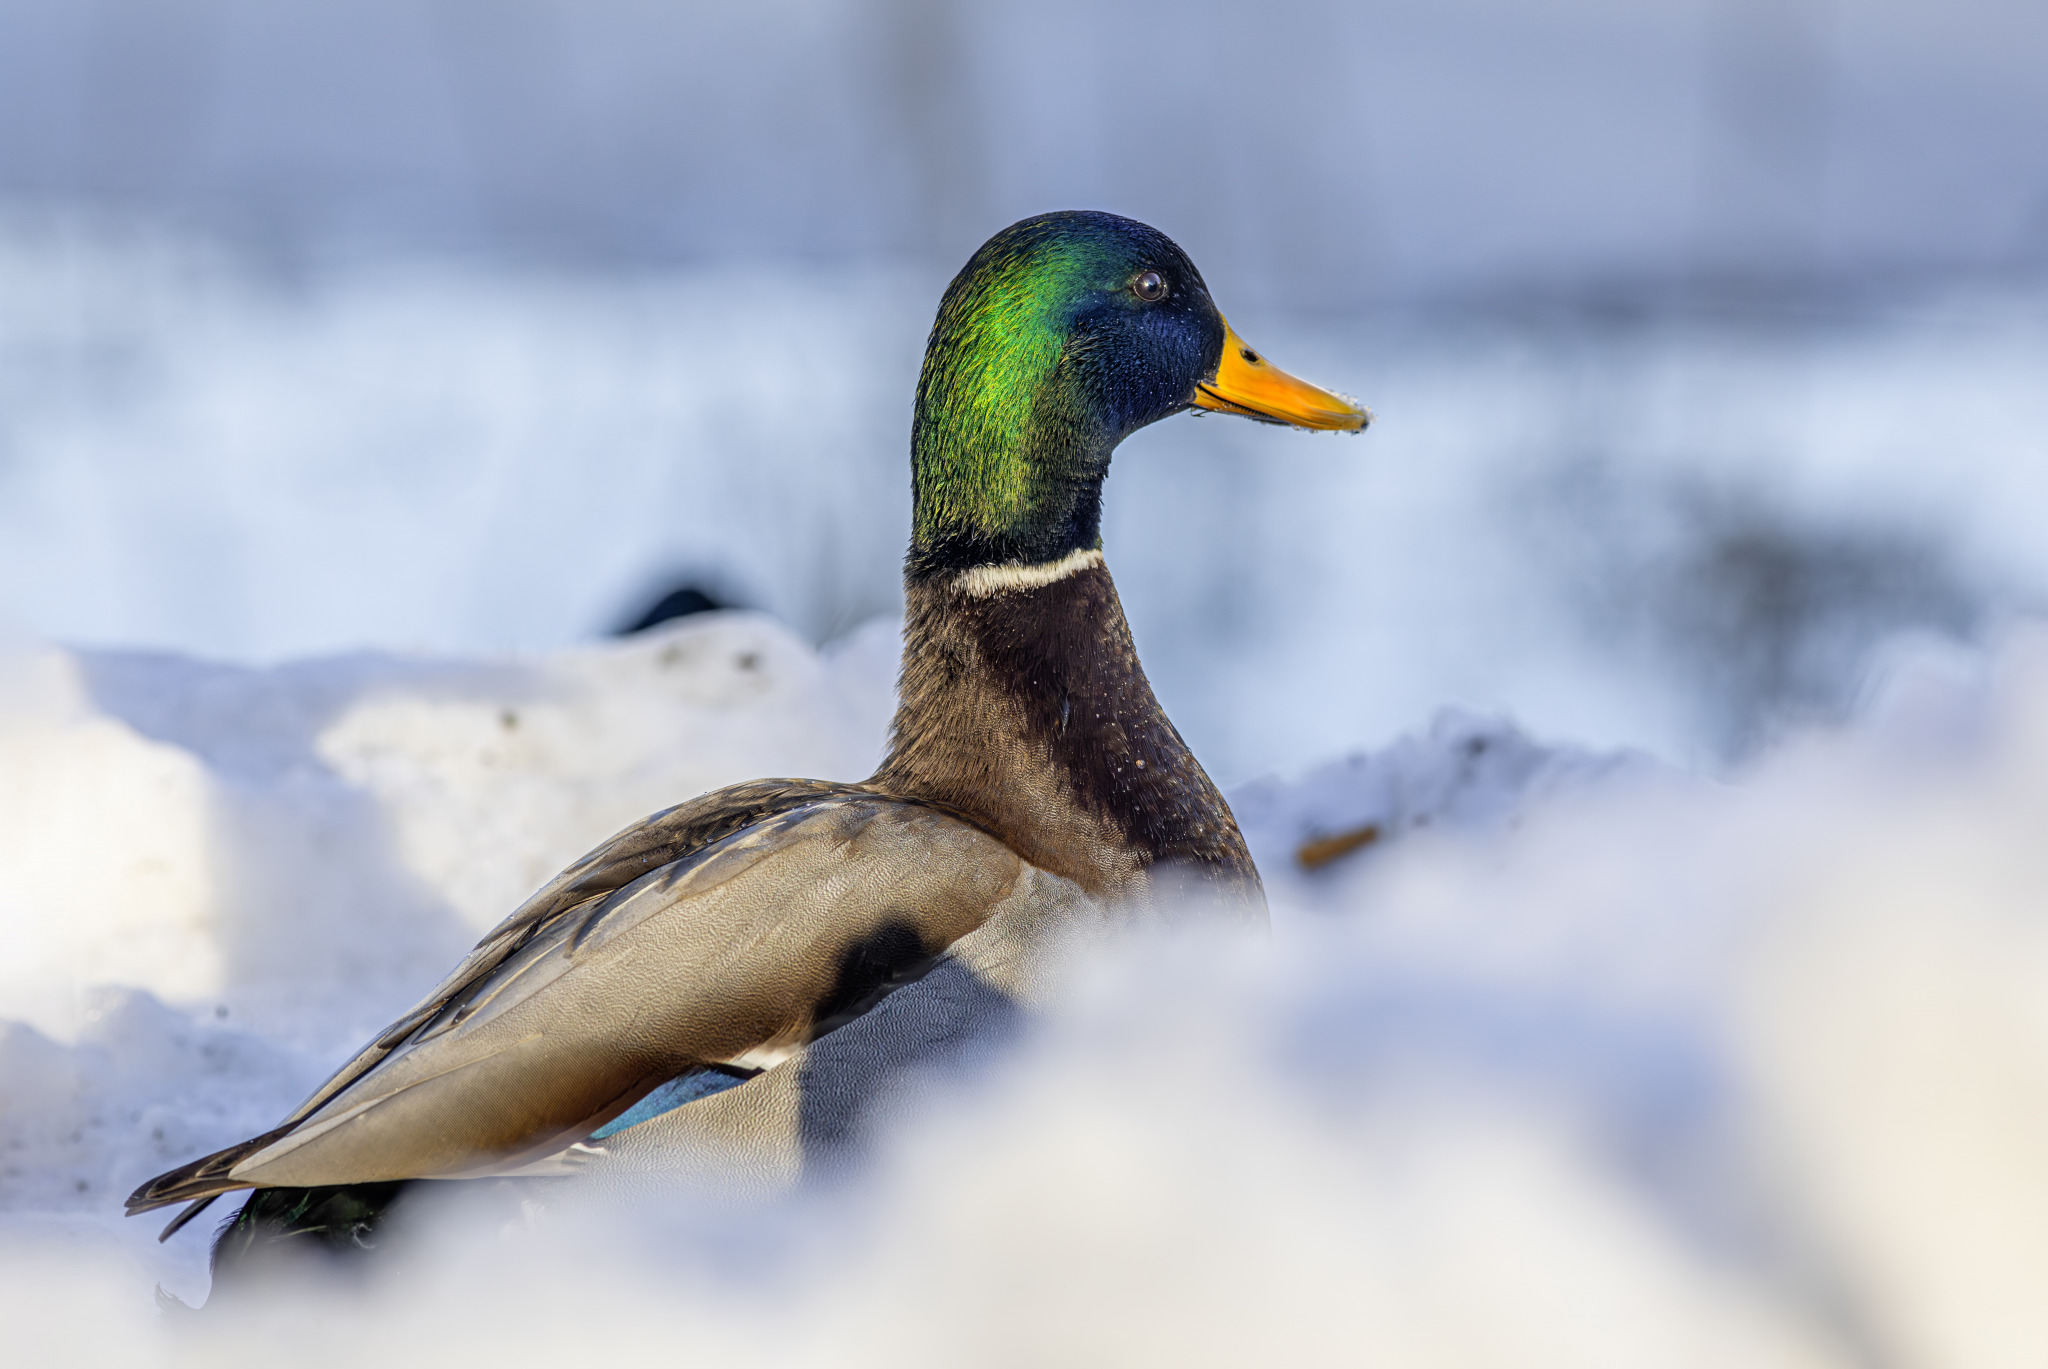 Male duck in snow